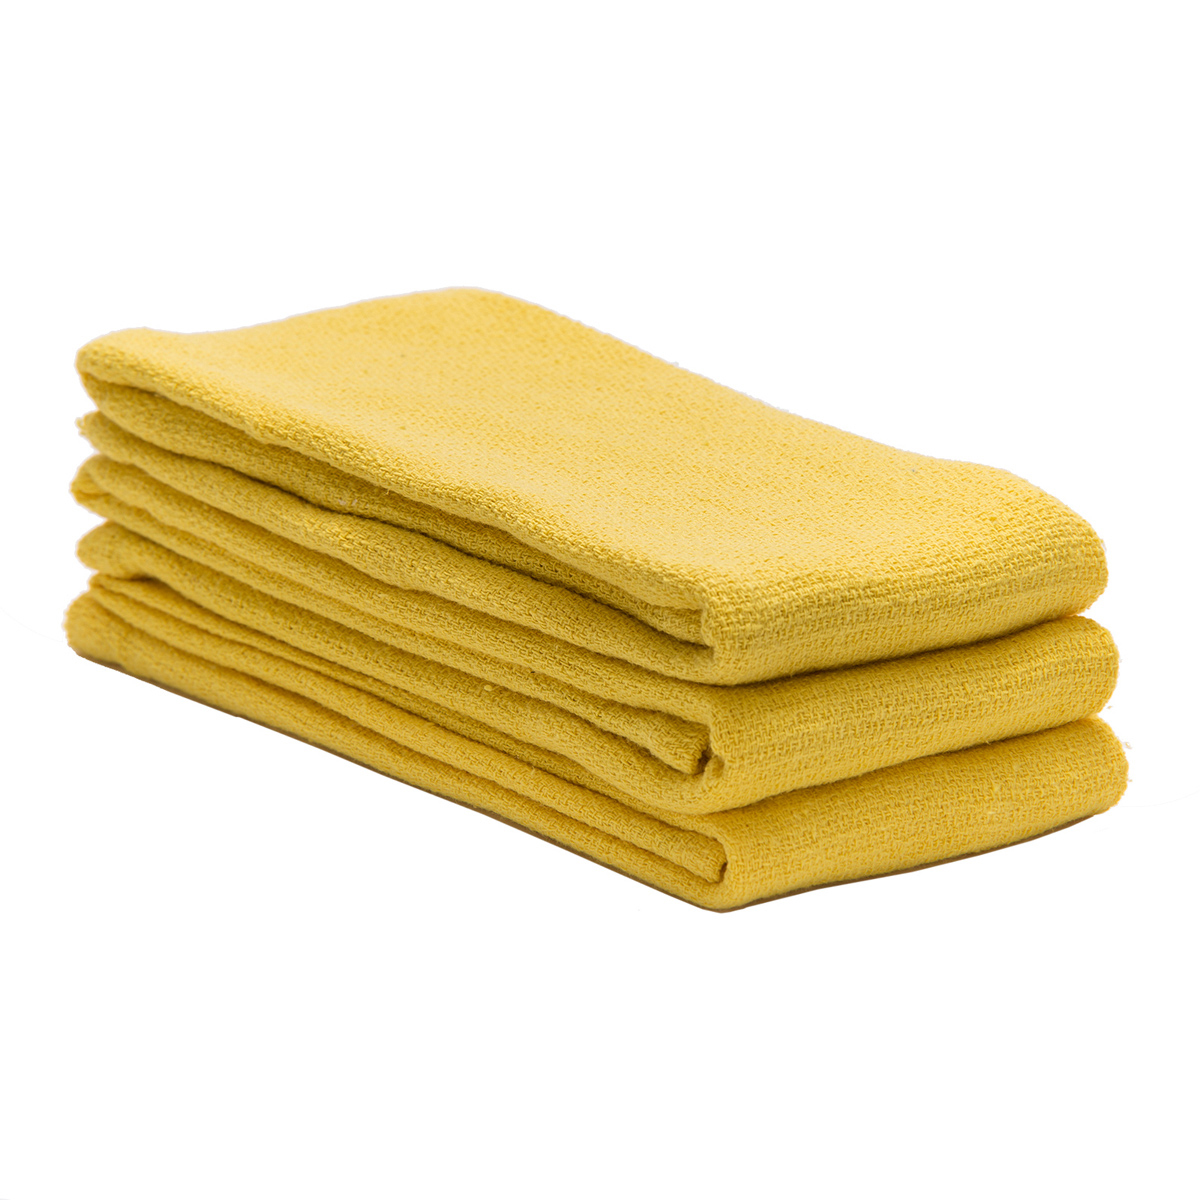 Reluen Cotton Huck Towels Blue 15 X 25 - Pack of 12 Pcs